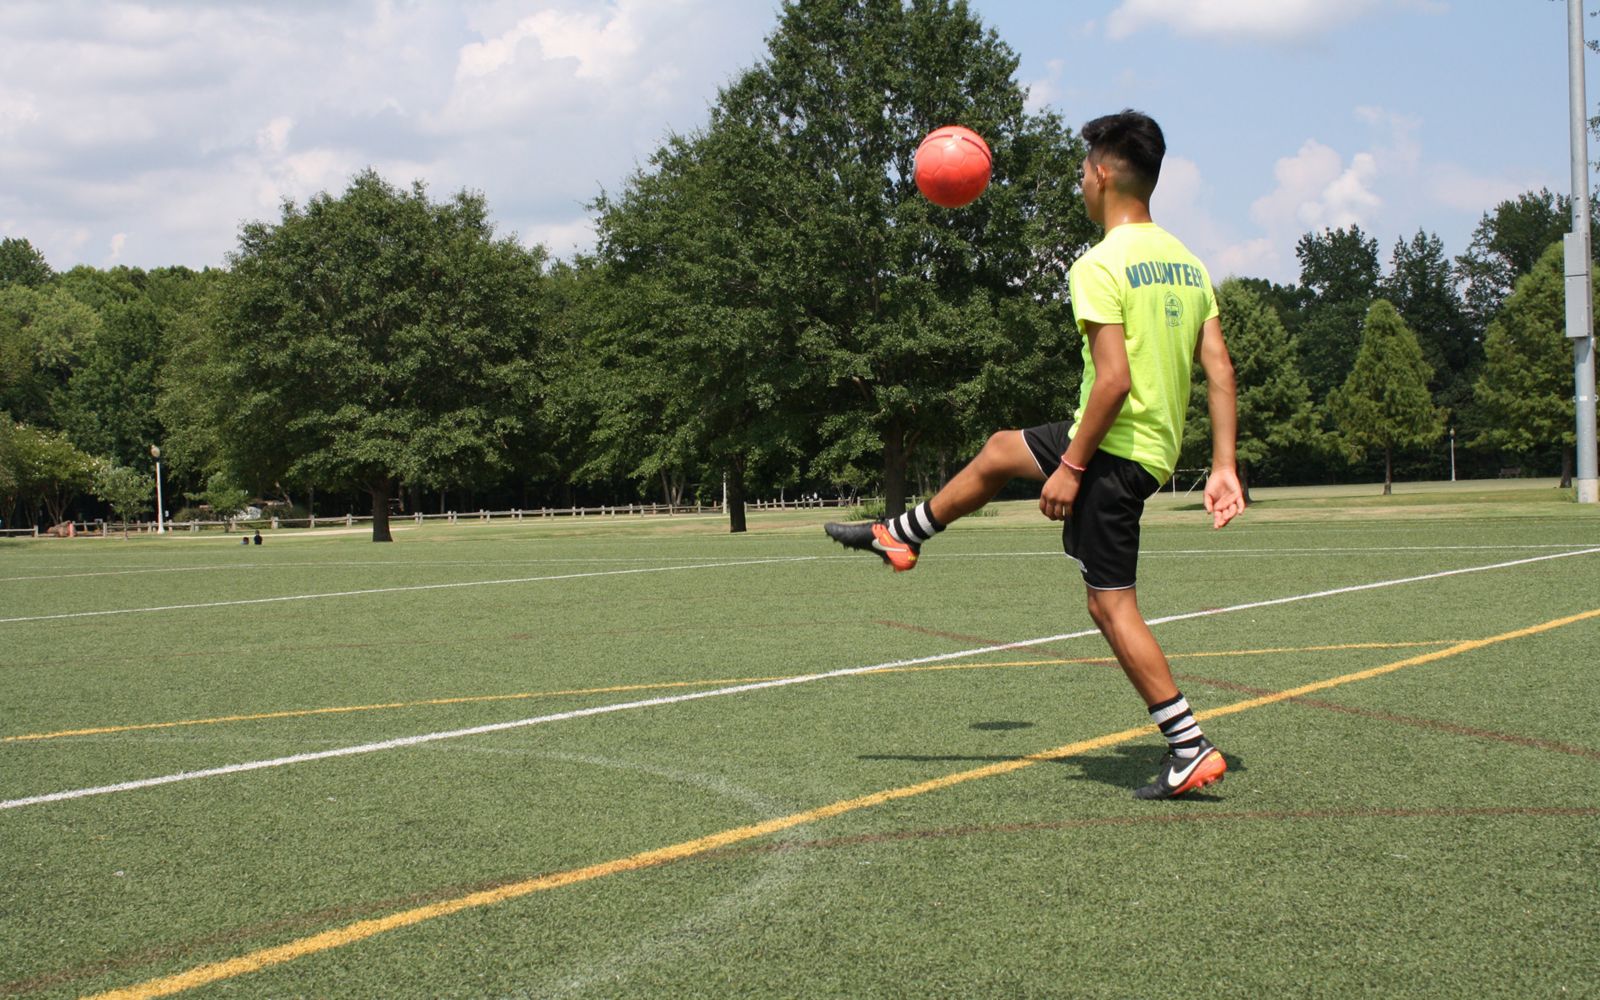 A boy kicks a soccer ball on a soccer field